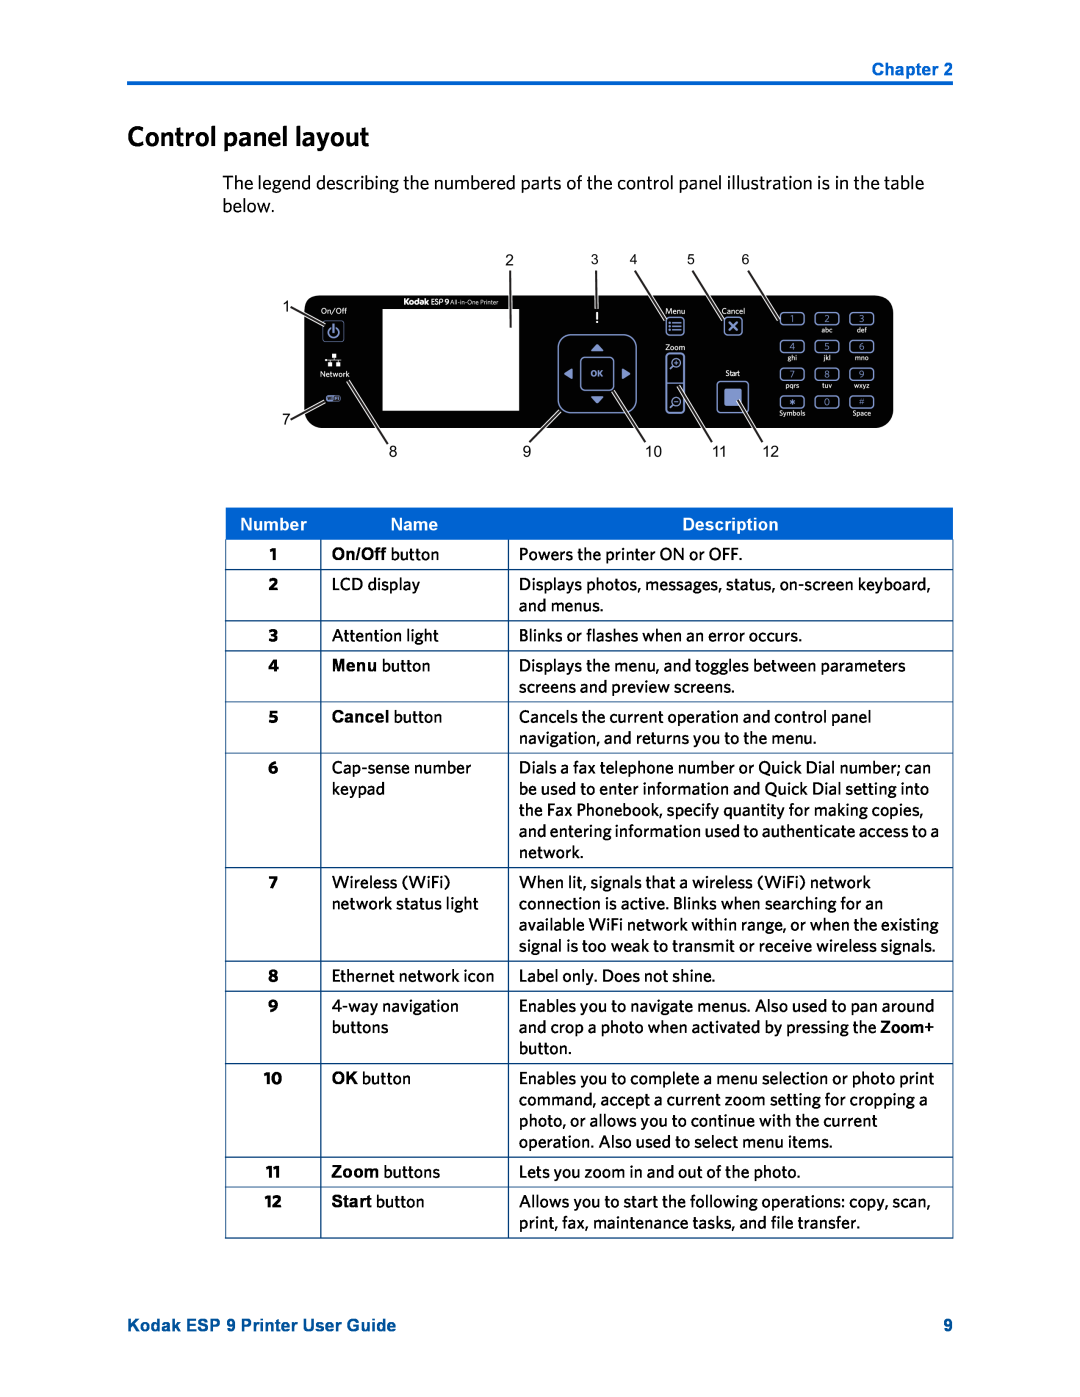 Kodak manual Control panel layout, Chapter, Number, Name, Description, Kodak ESP 9 Printer User Guide 